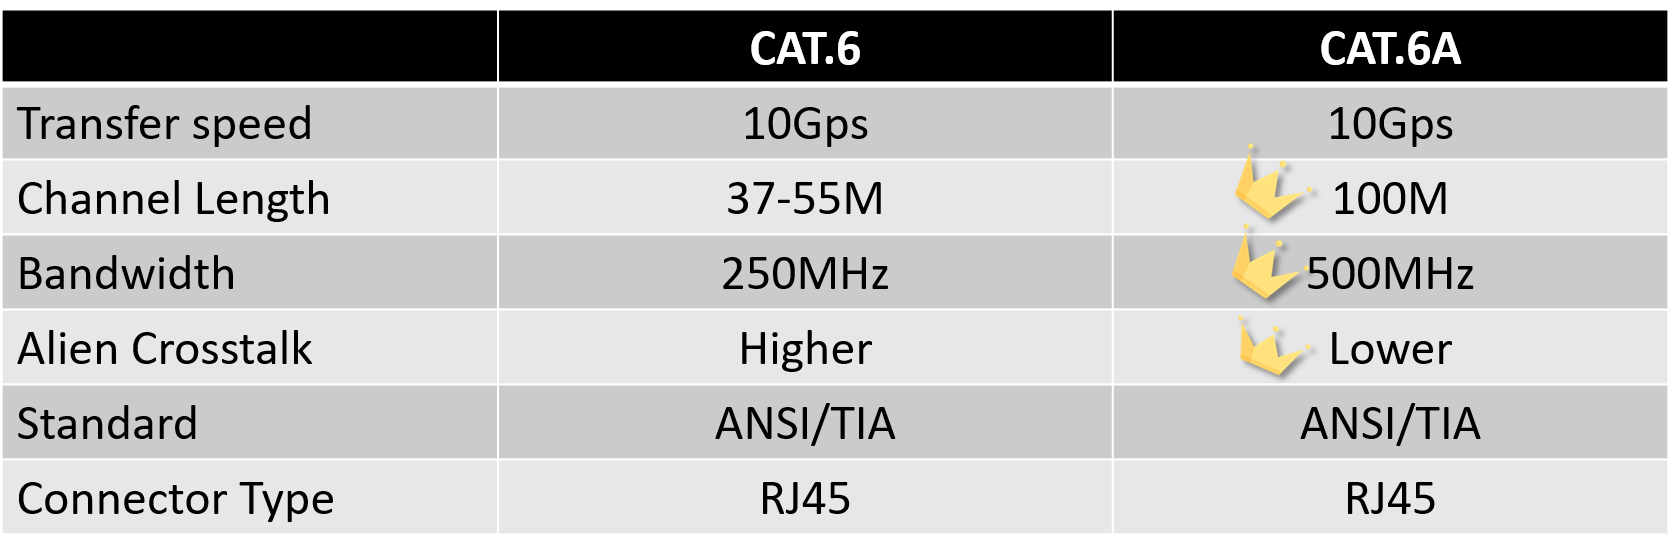 Cat6A is better than Cat6?